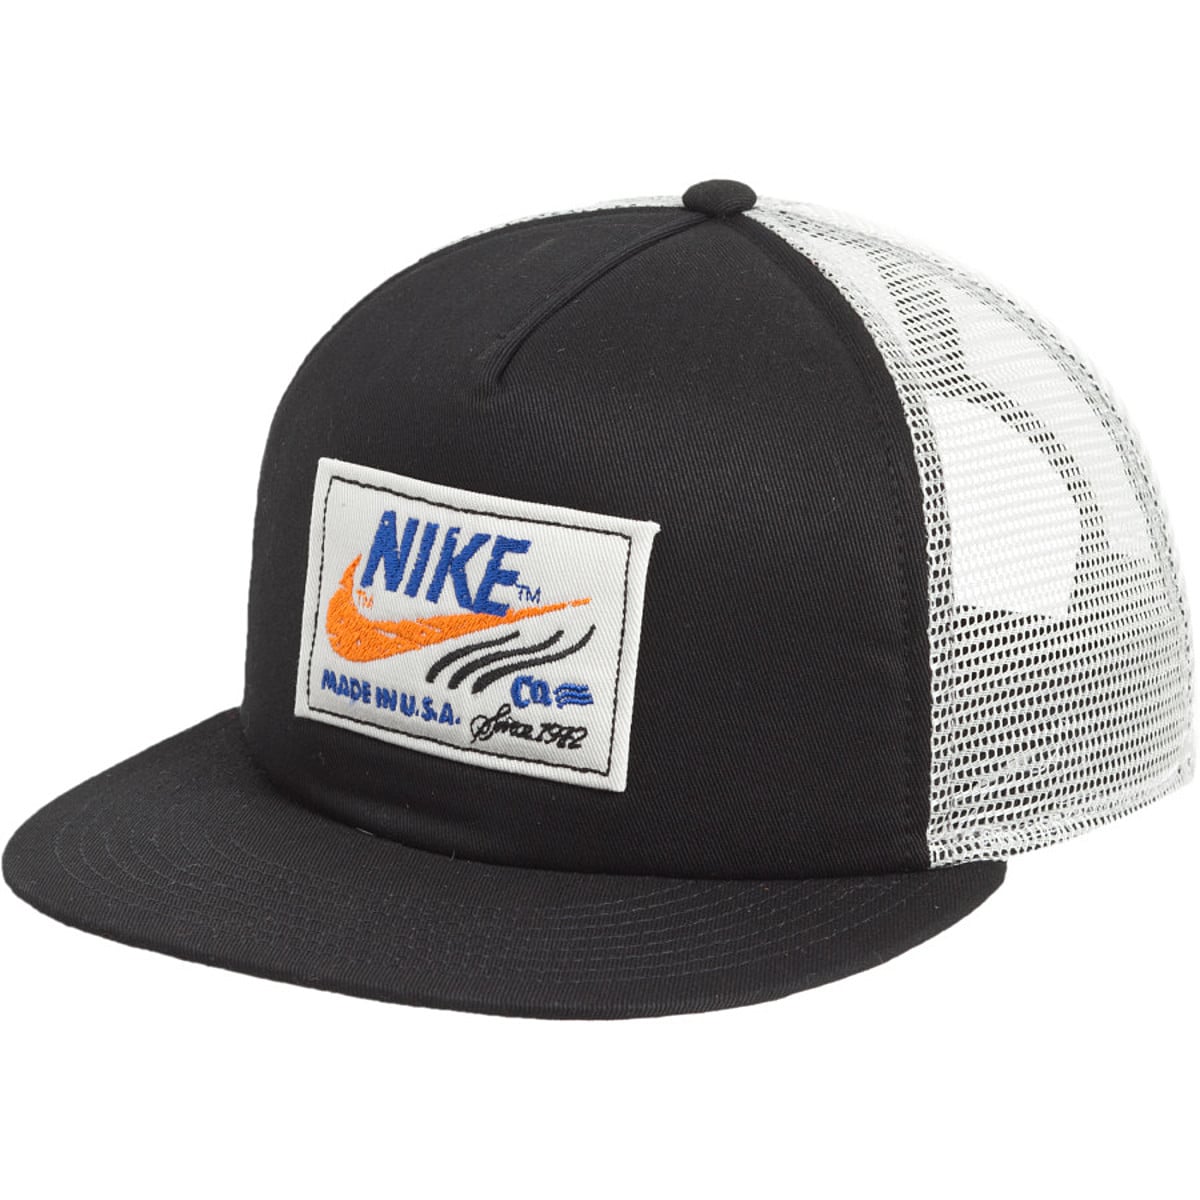 Facturable escritura Boquilla Nike Labeled Snapback Trucker Hat - Accessories